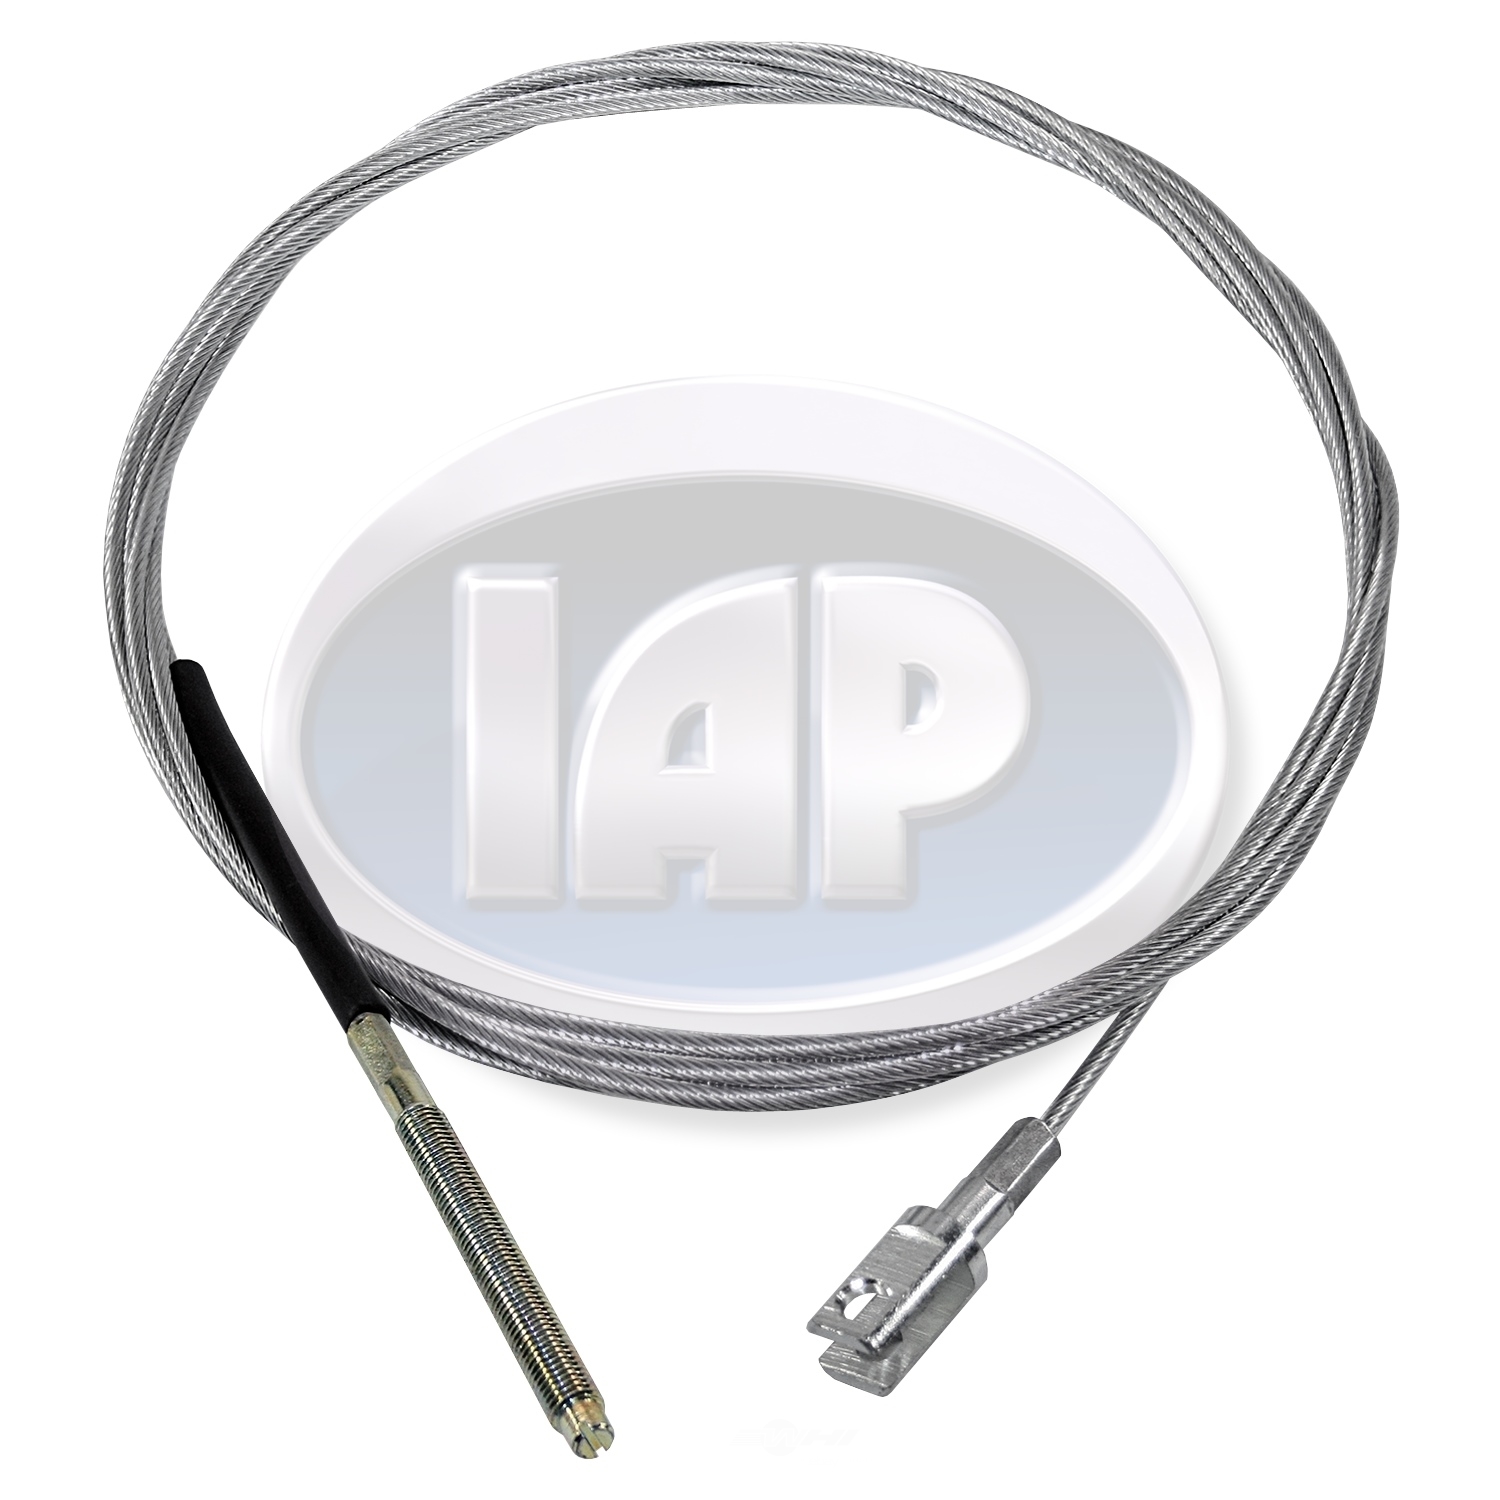 IAP/KUHLTEK MOTORWERKS - Clutch Cable - KMS 211721335B